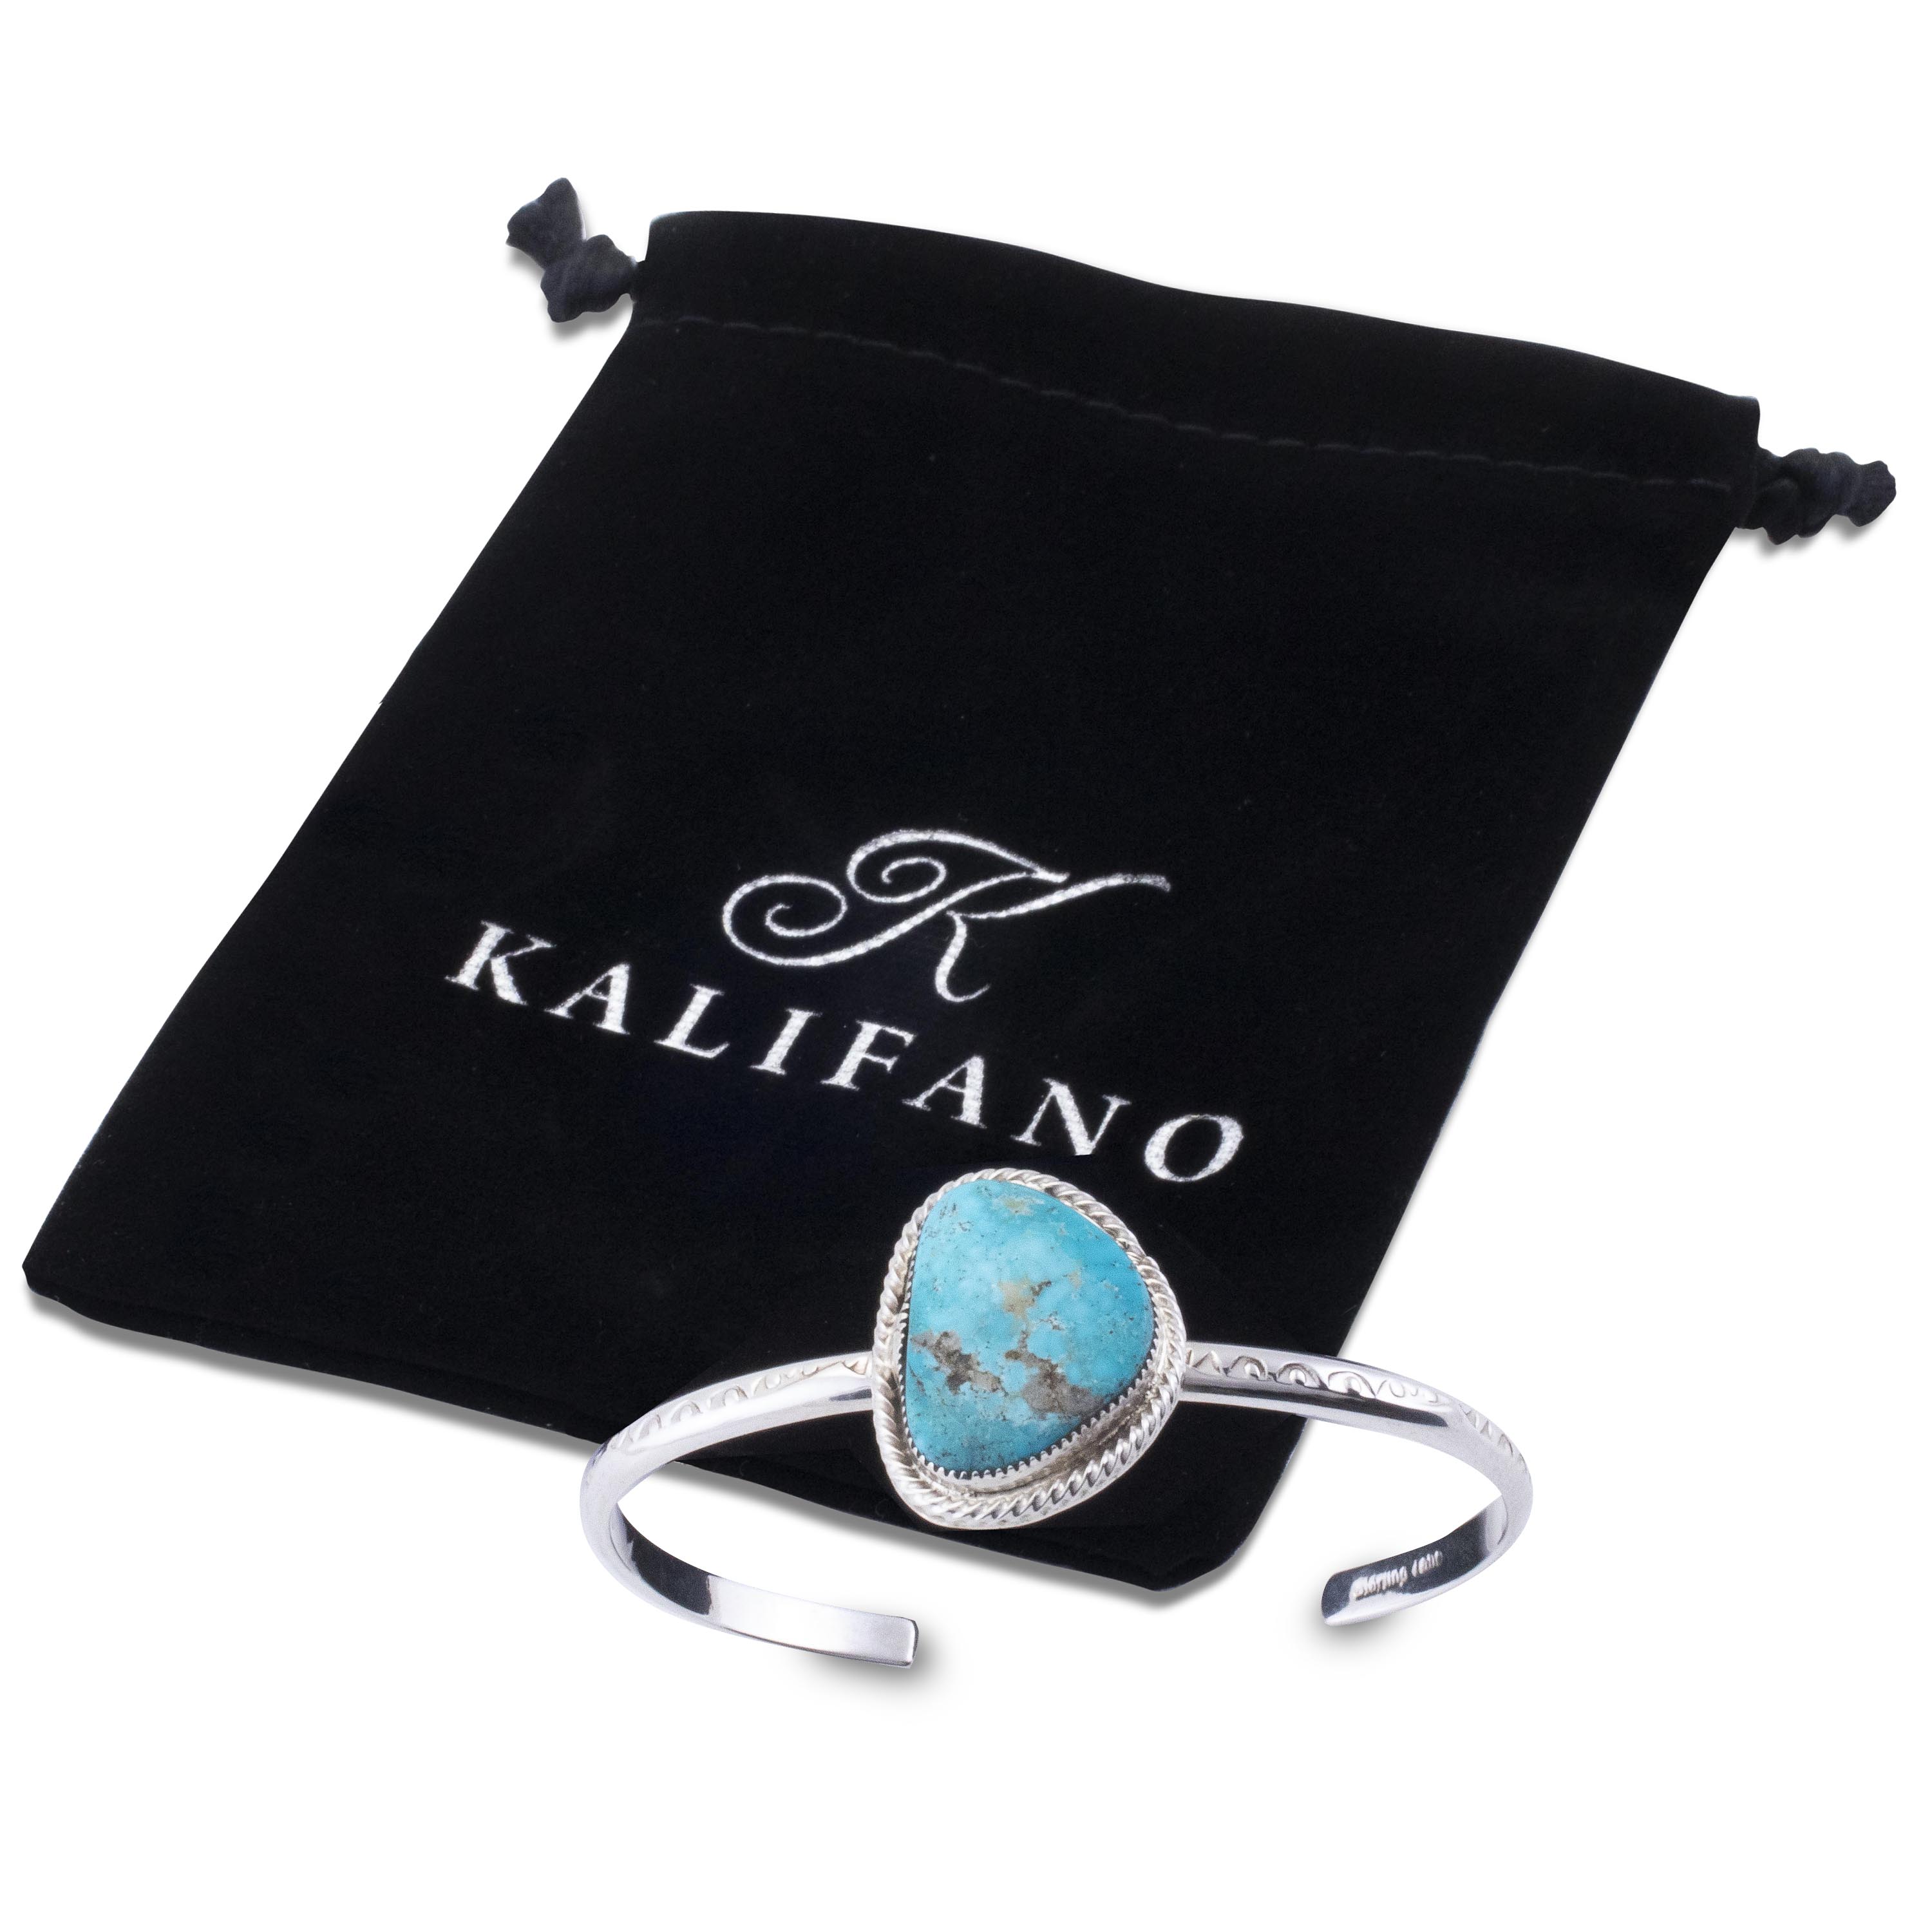 Kalifano Native American Jewelry Tahe Navajo Kingman Turquoise USA Native American Made 925 Sterling Silver Cuff NAB900.008